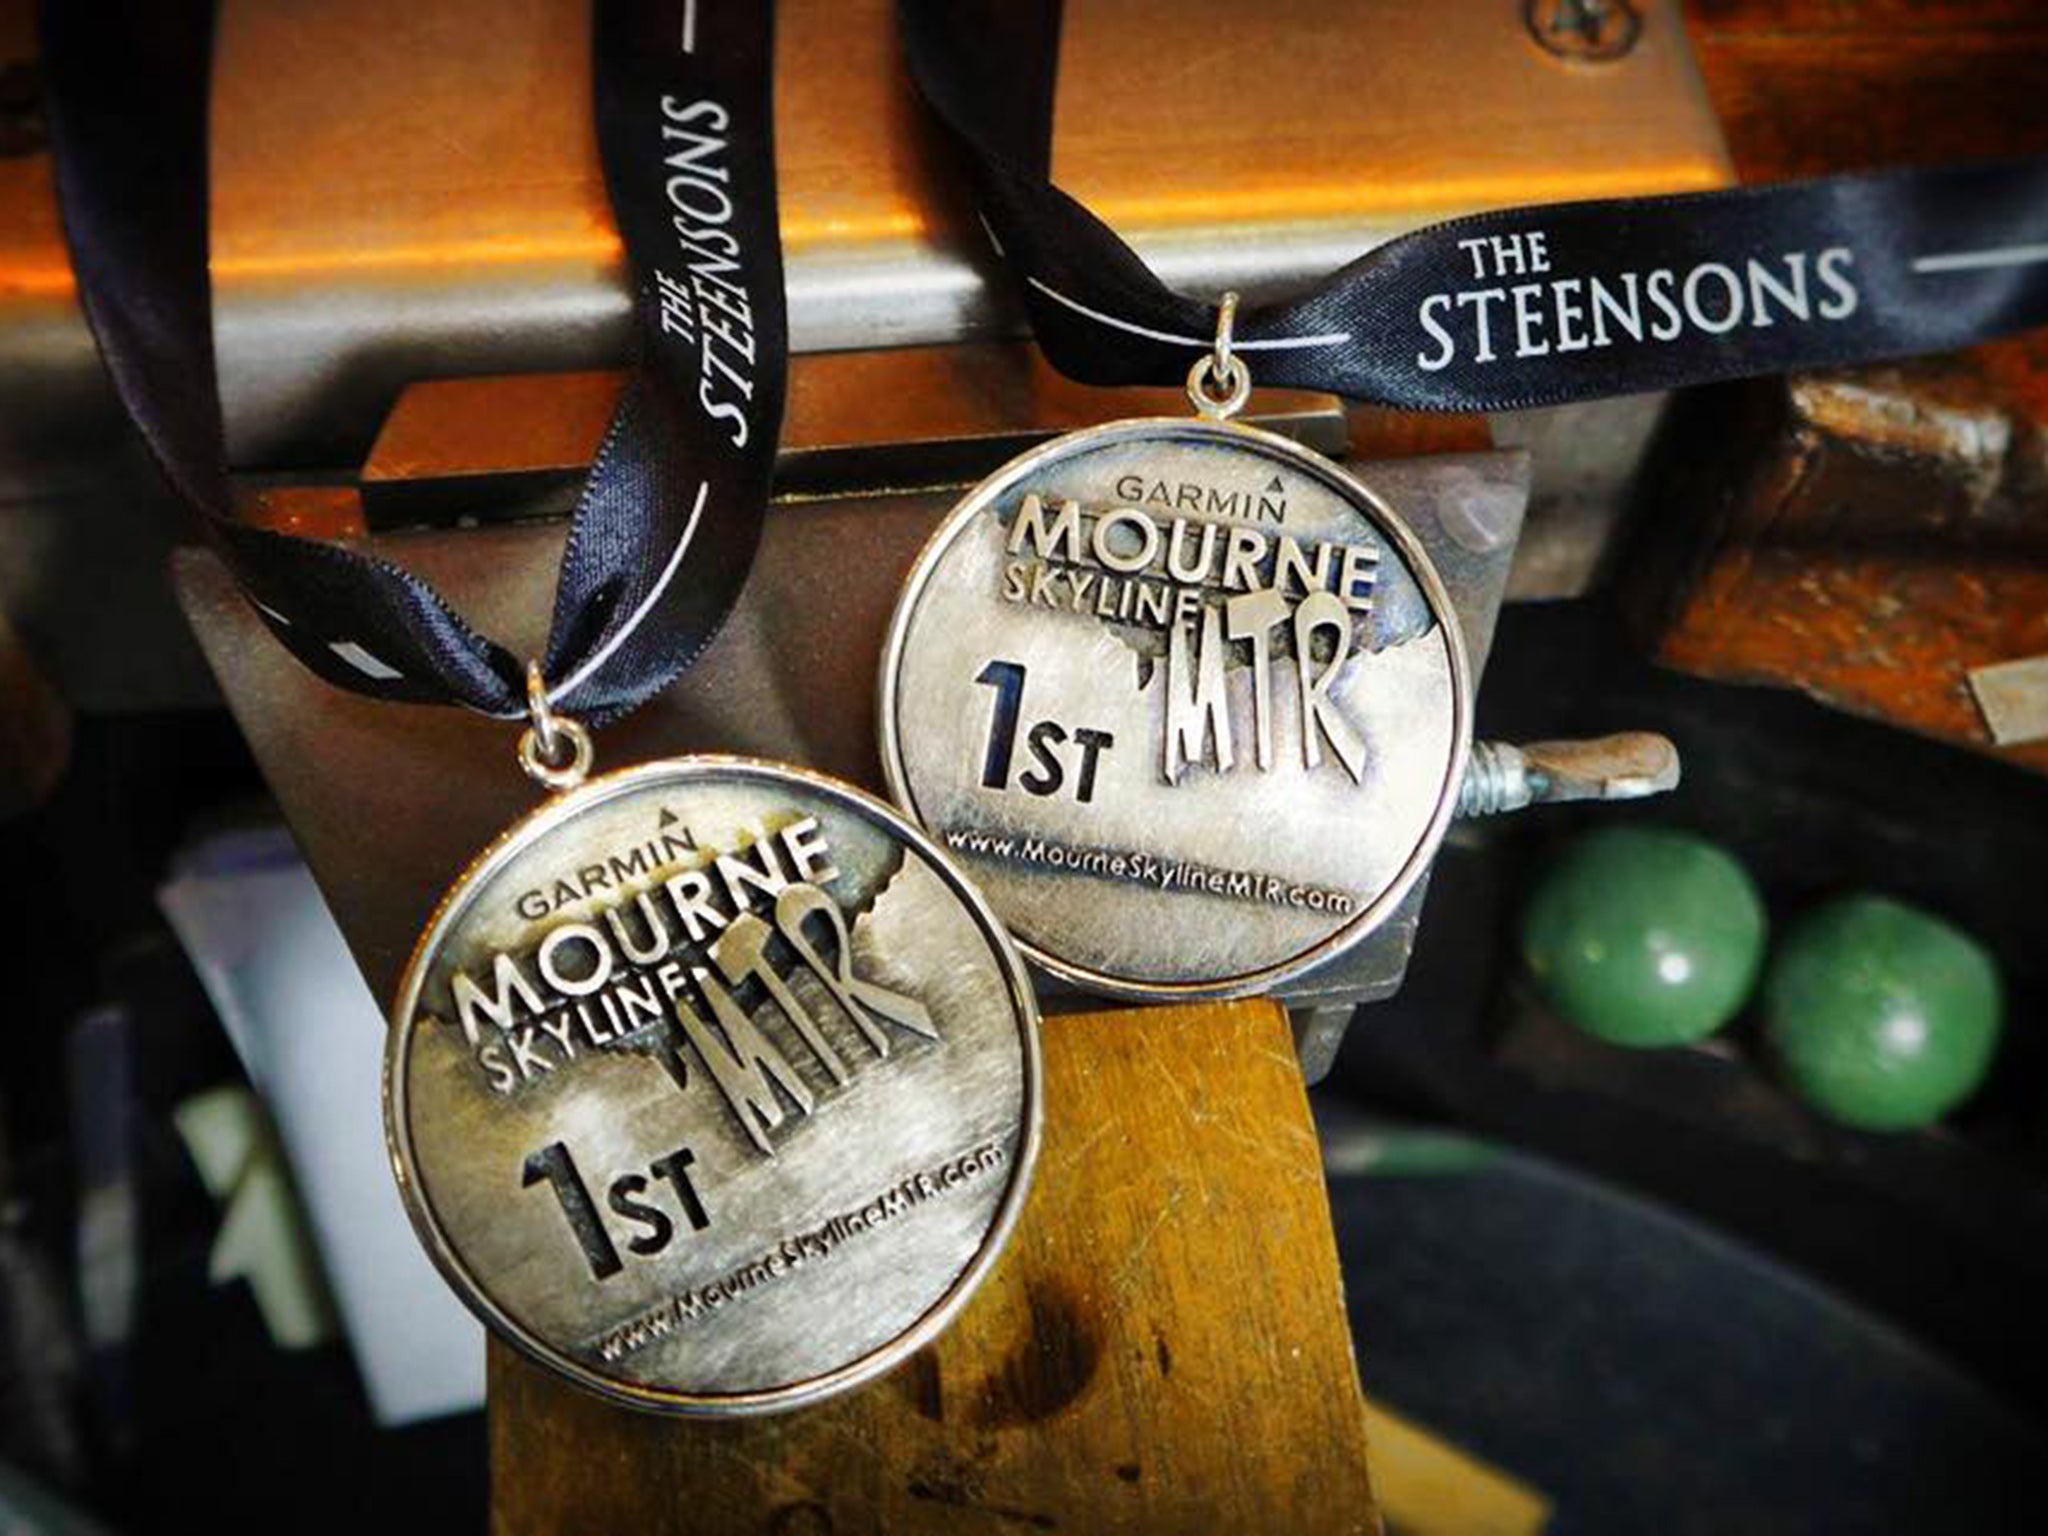 The Garmin Mourne Skyline winner's medals